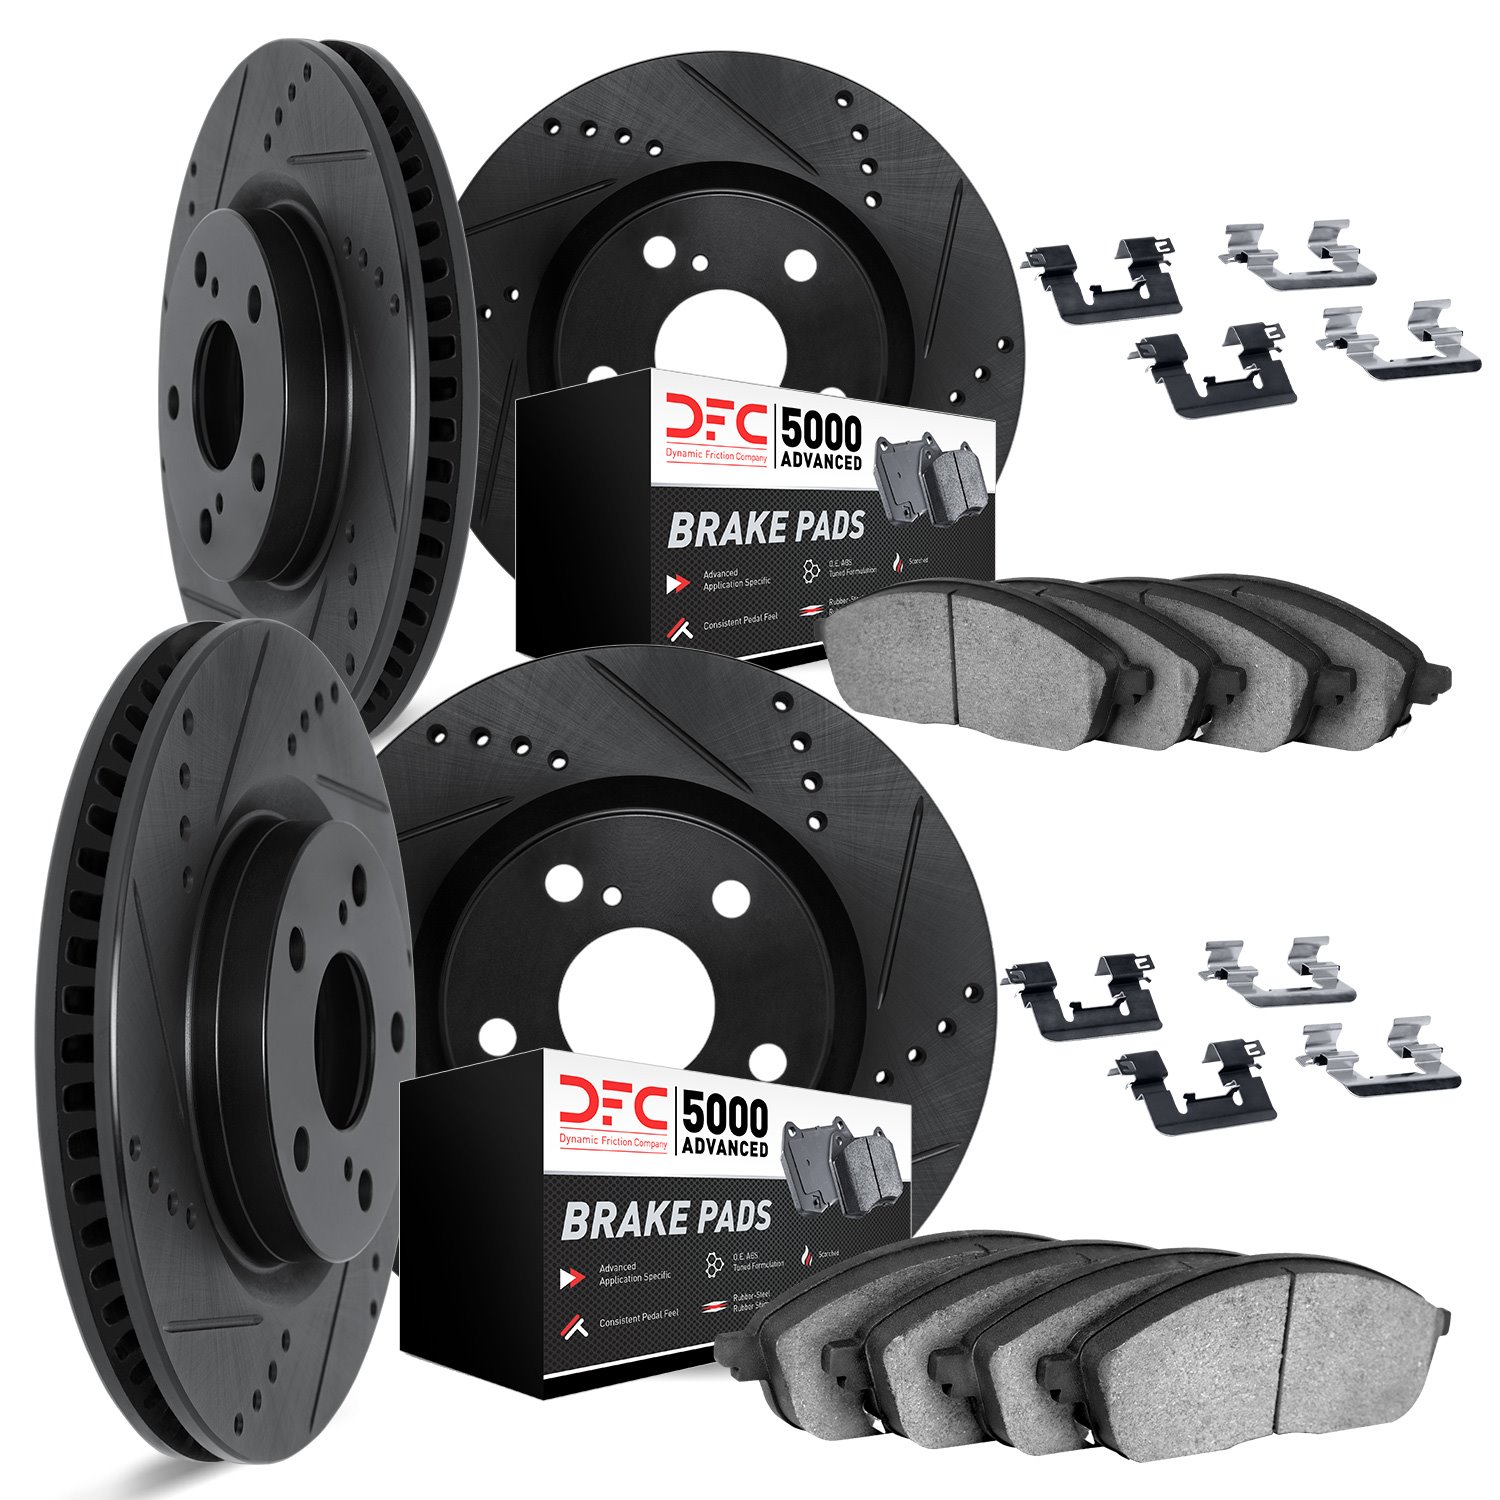 8514-67073 Drilled/Slotted Brake Rotors w/5000 Advanced Brake Pads Kit & Hardware [Black], Fits Select Infiniti/Nissan, Position